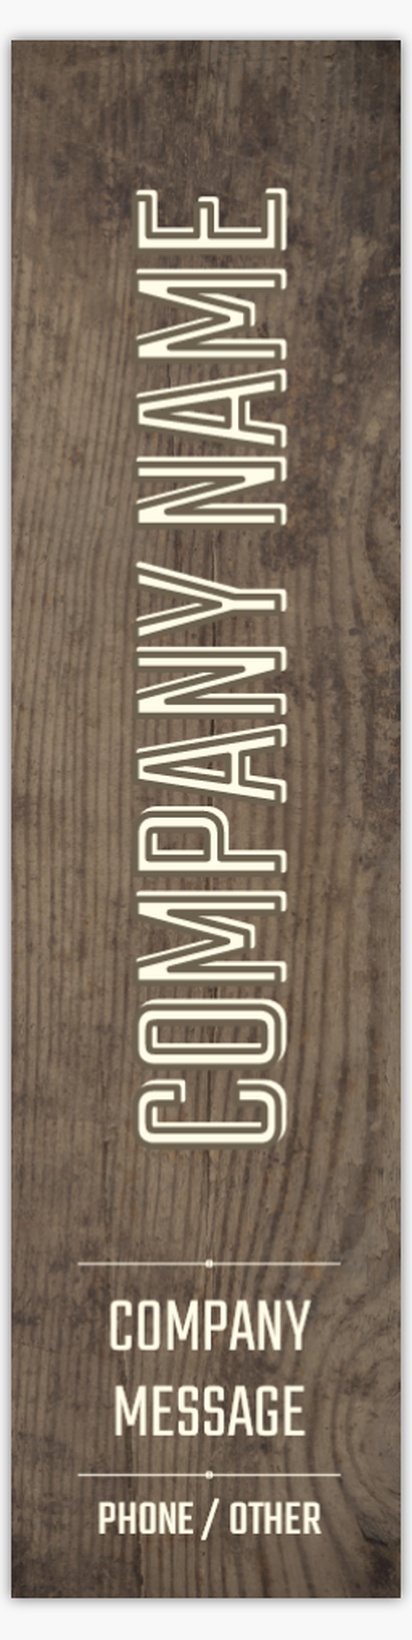 Design Preview for Design Gallery: Flooring & Tiling Vinyl Banners, 76 x 305 cm